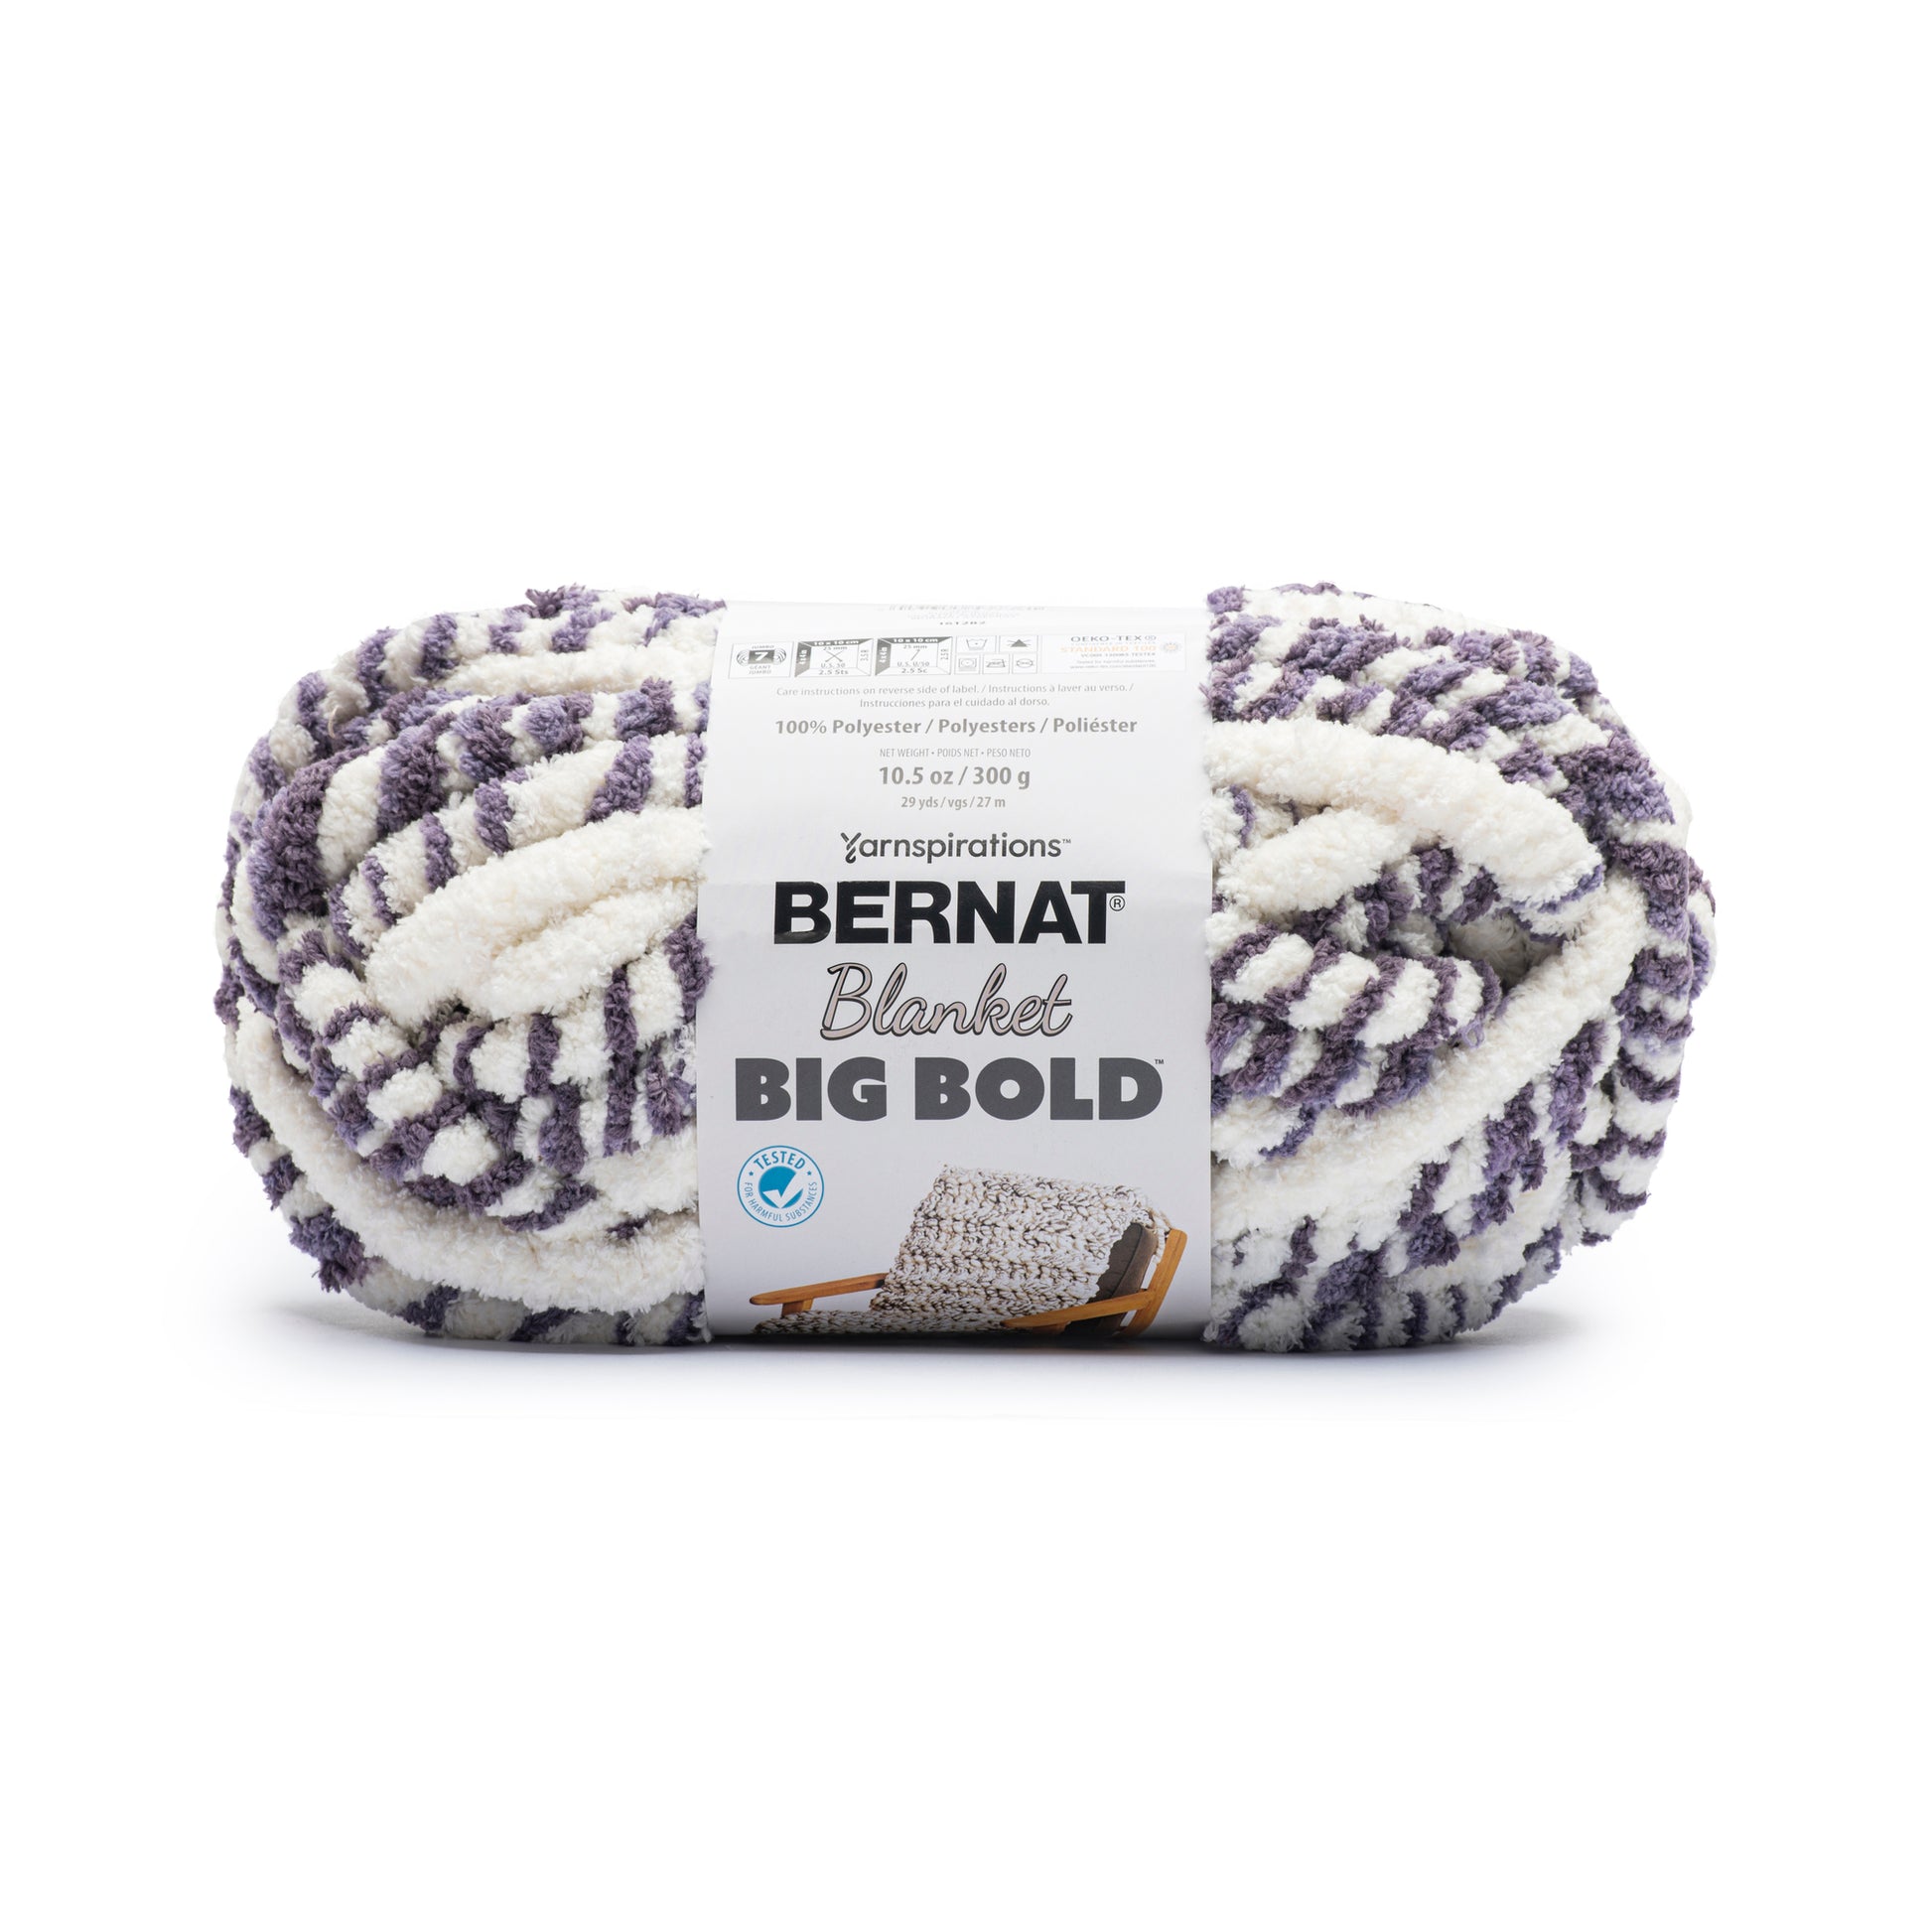 Bernat Blanket Big Bold Yarn (300g/10.5oz)